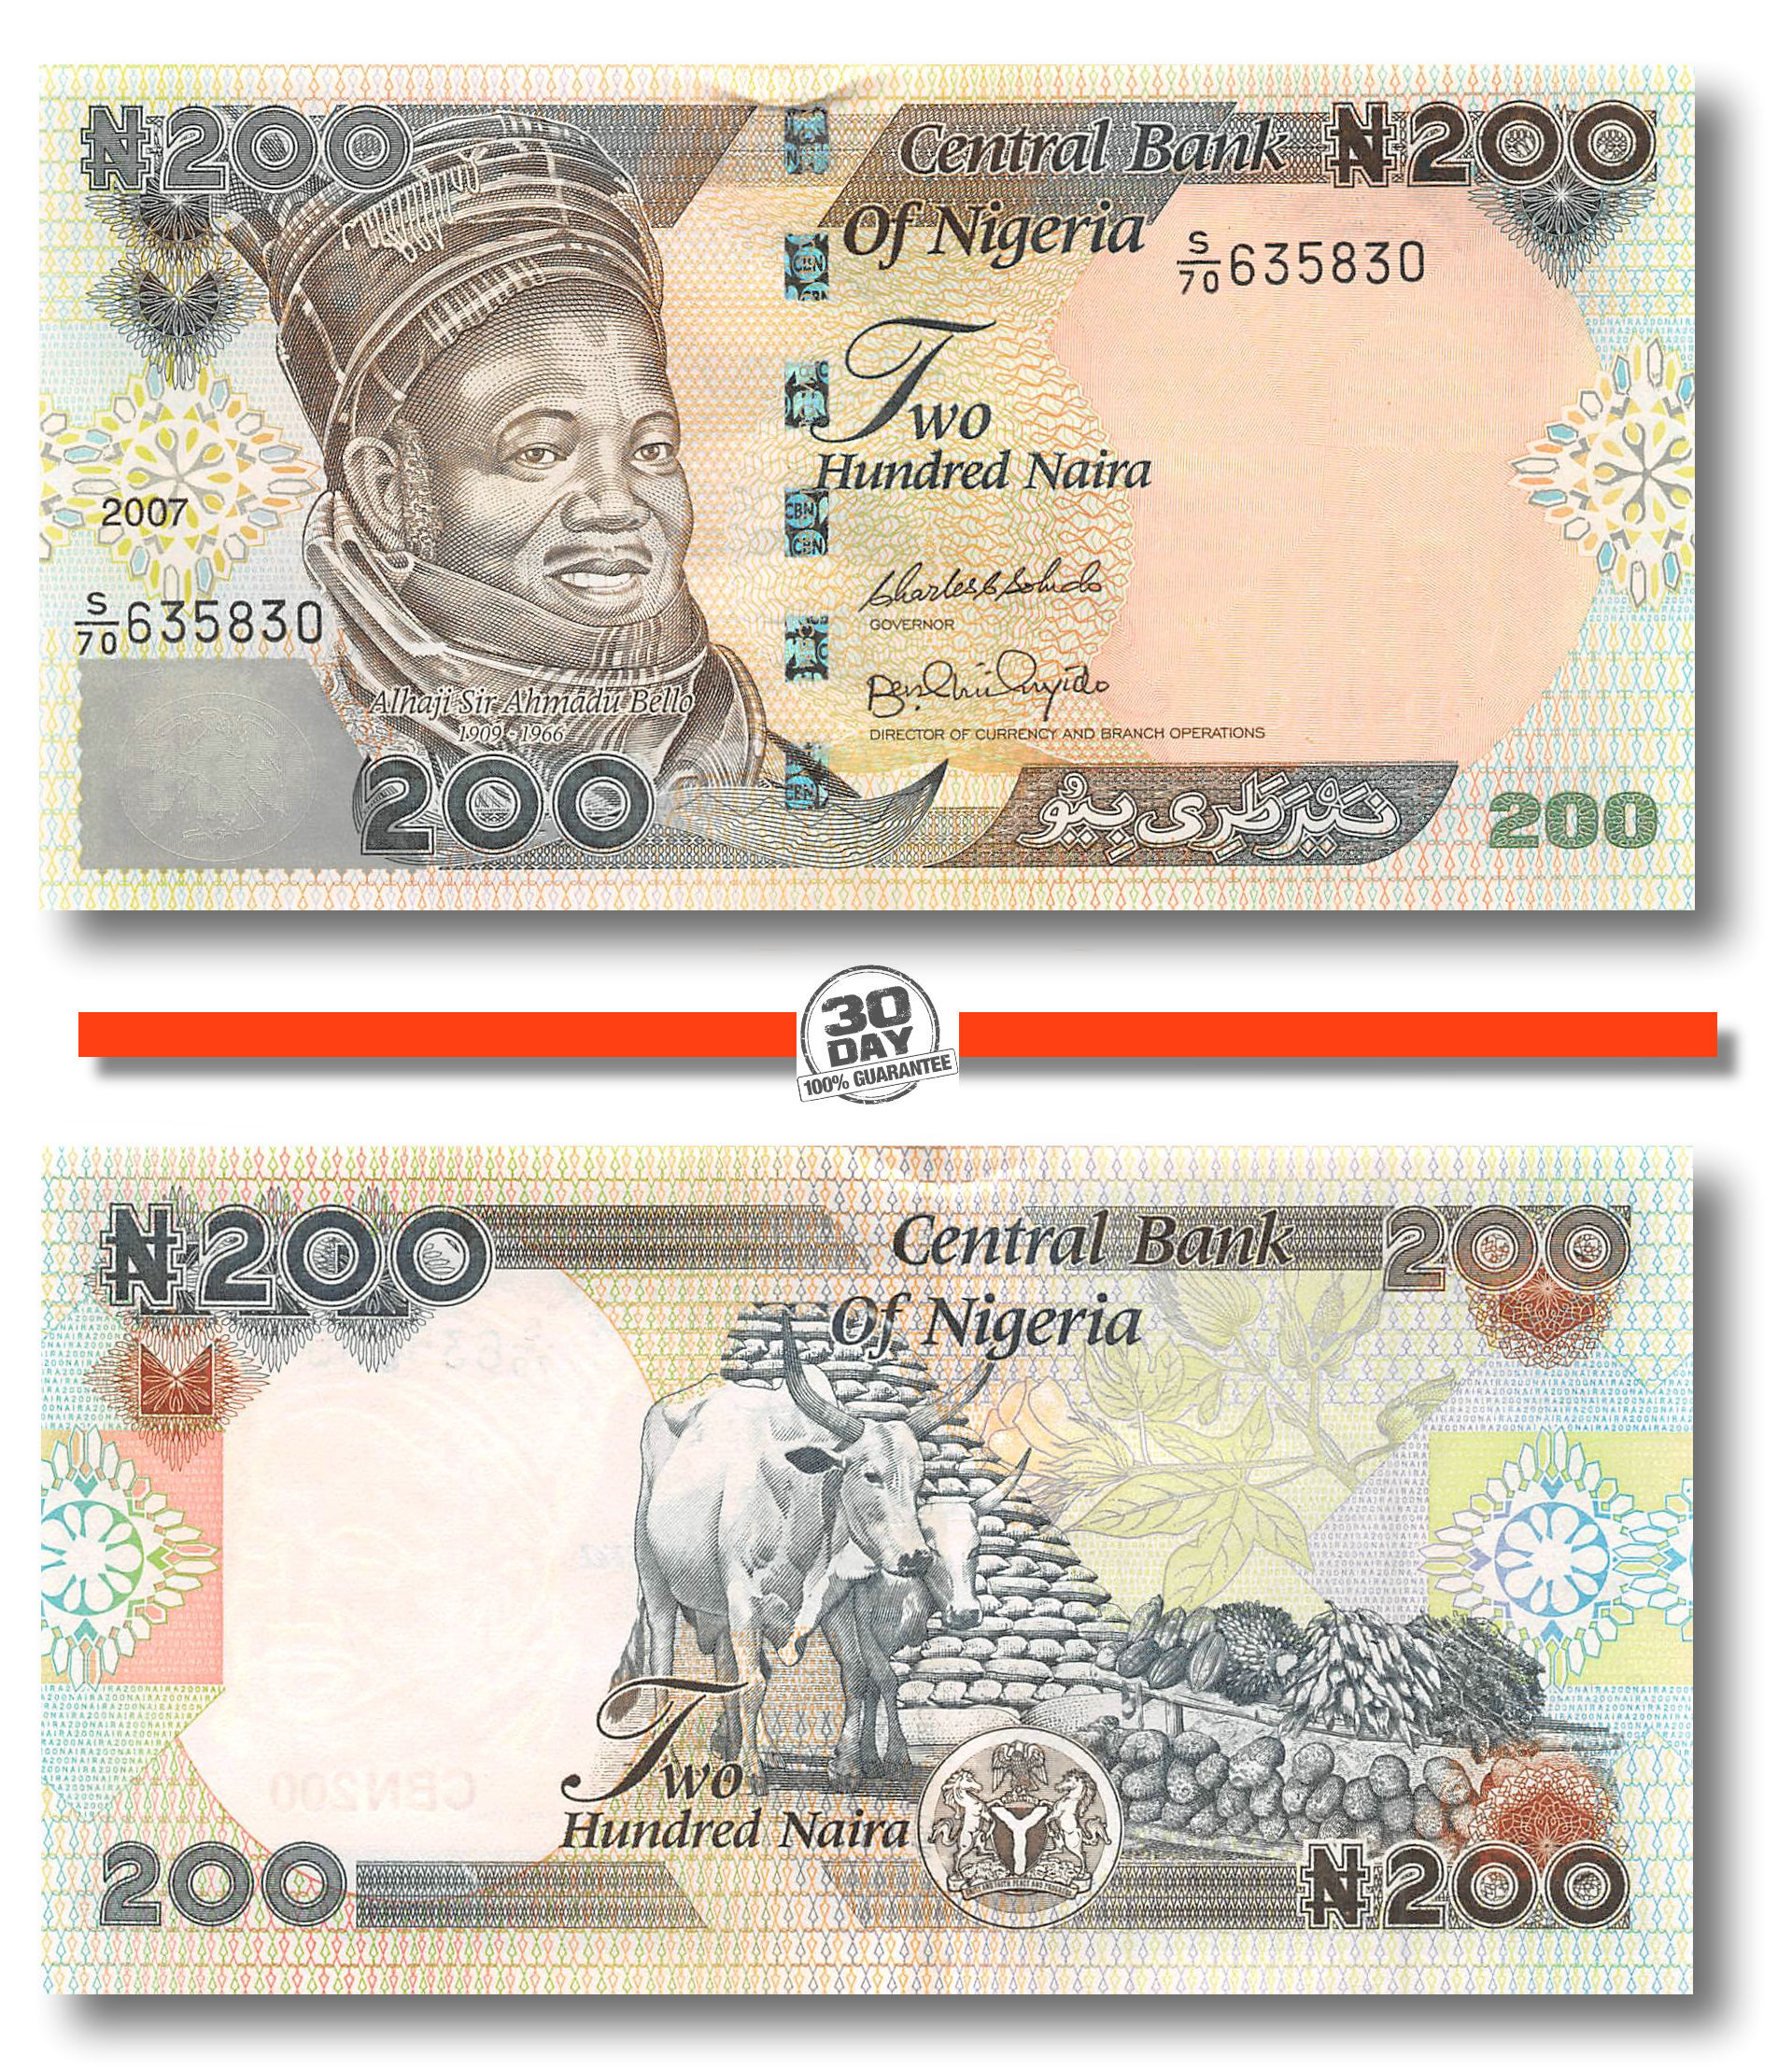 Details about   NIGERIA 200 NAIRA 2008 P 29 UNC */* 